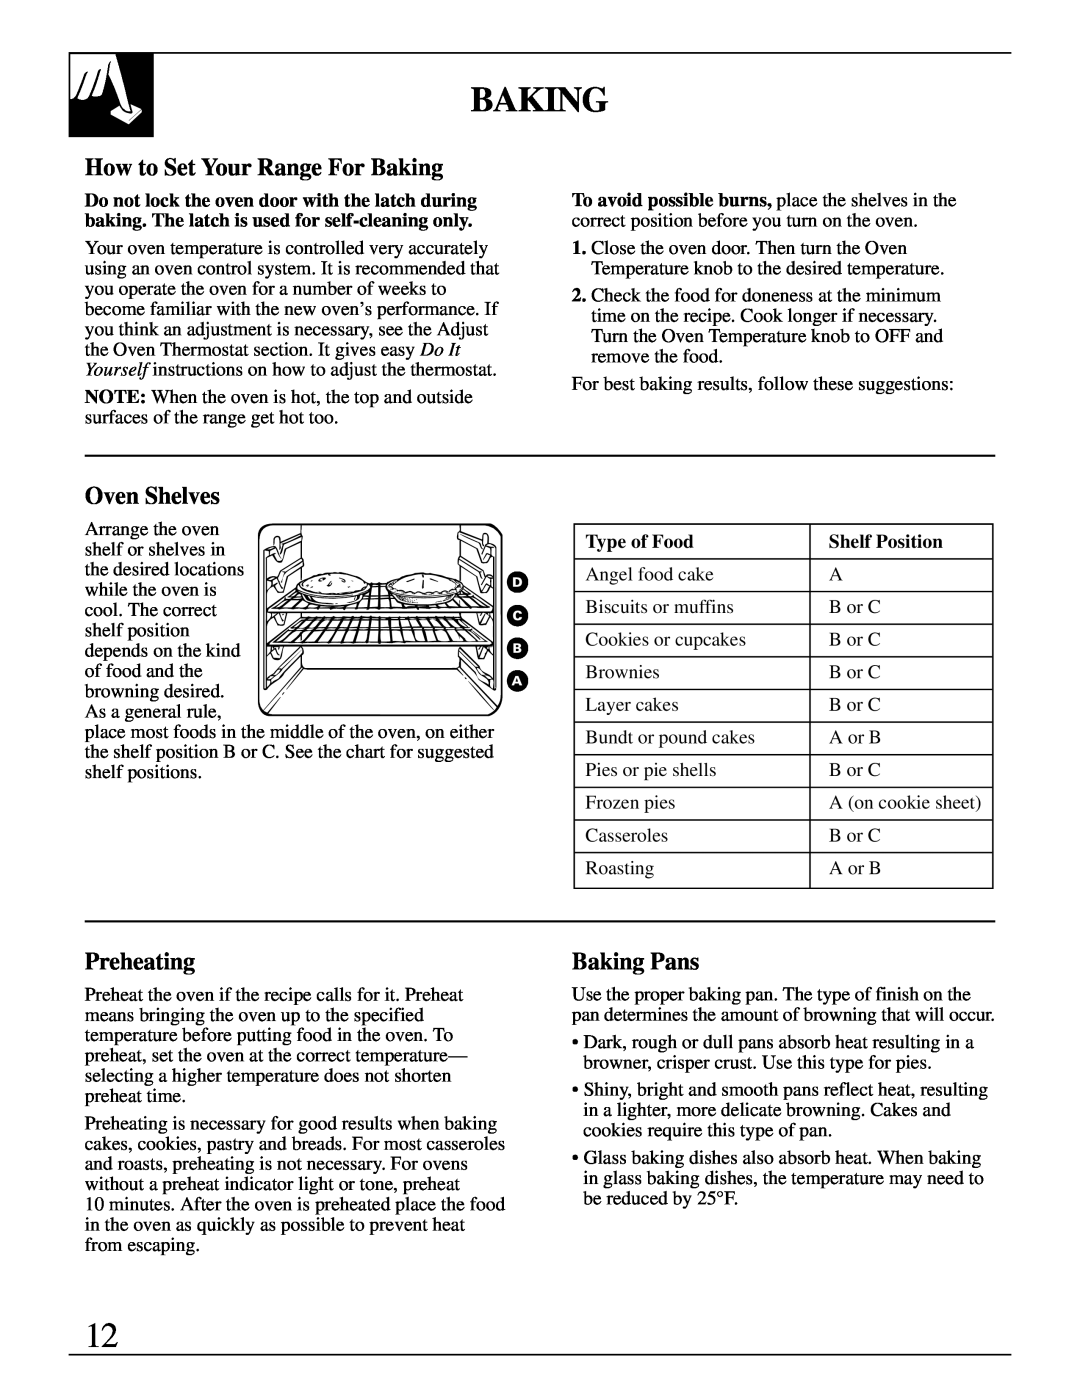 GE JGBP19, 164D2966P079 warranty How to Set Your Range For Baking, Preheating, Baking Pans, Oven Shelves 